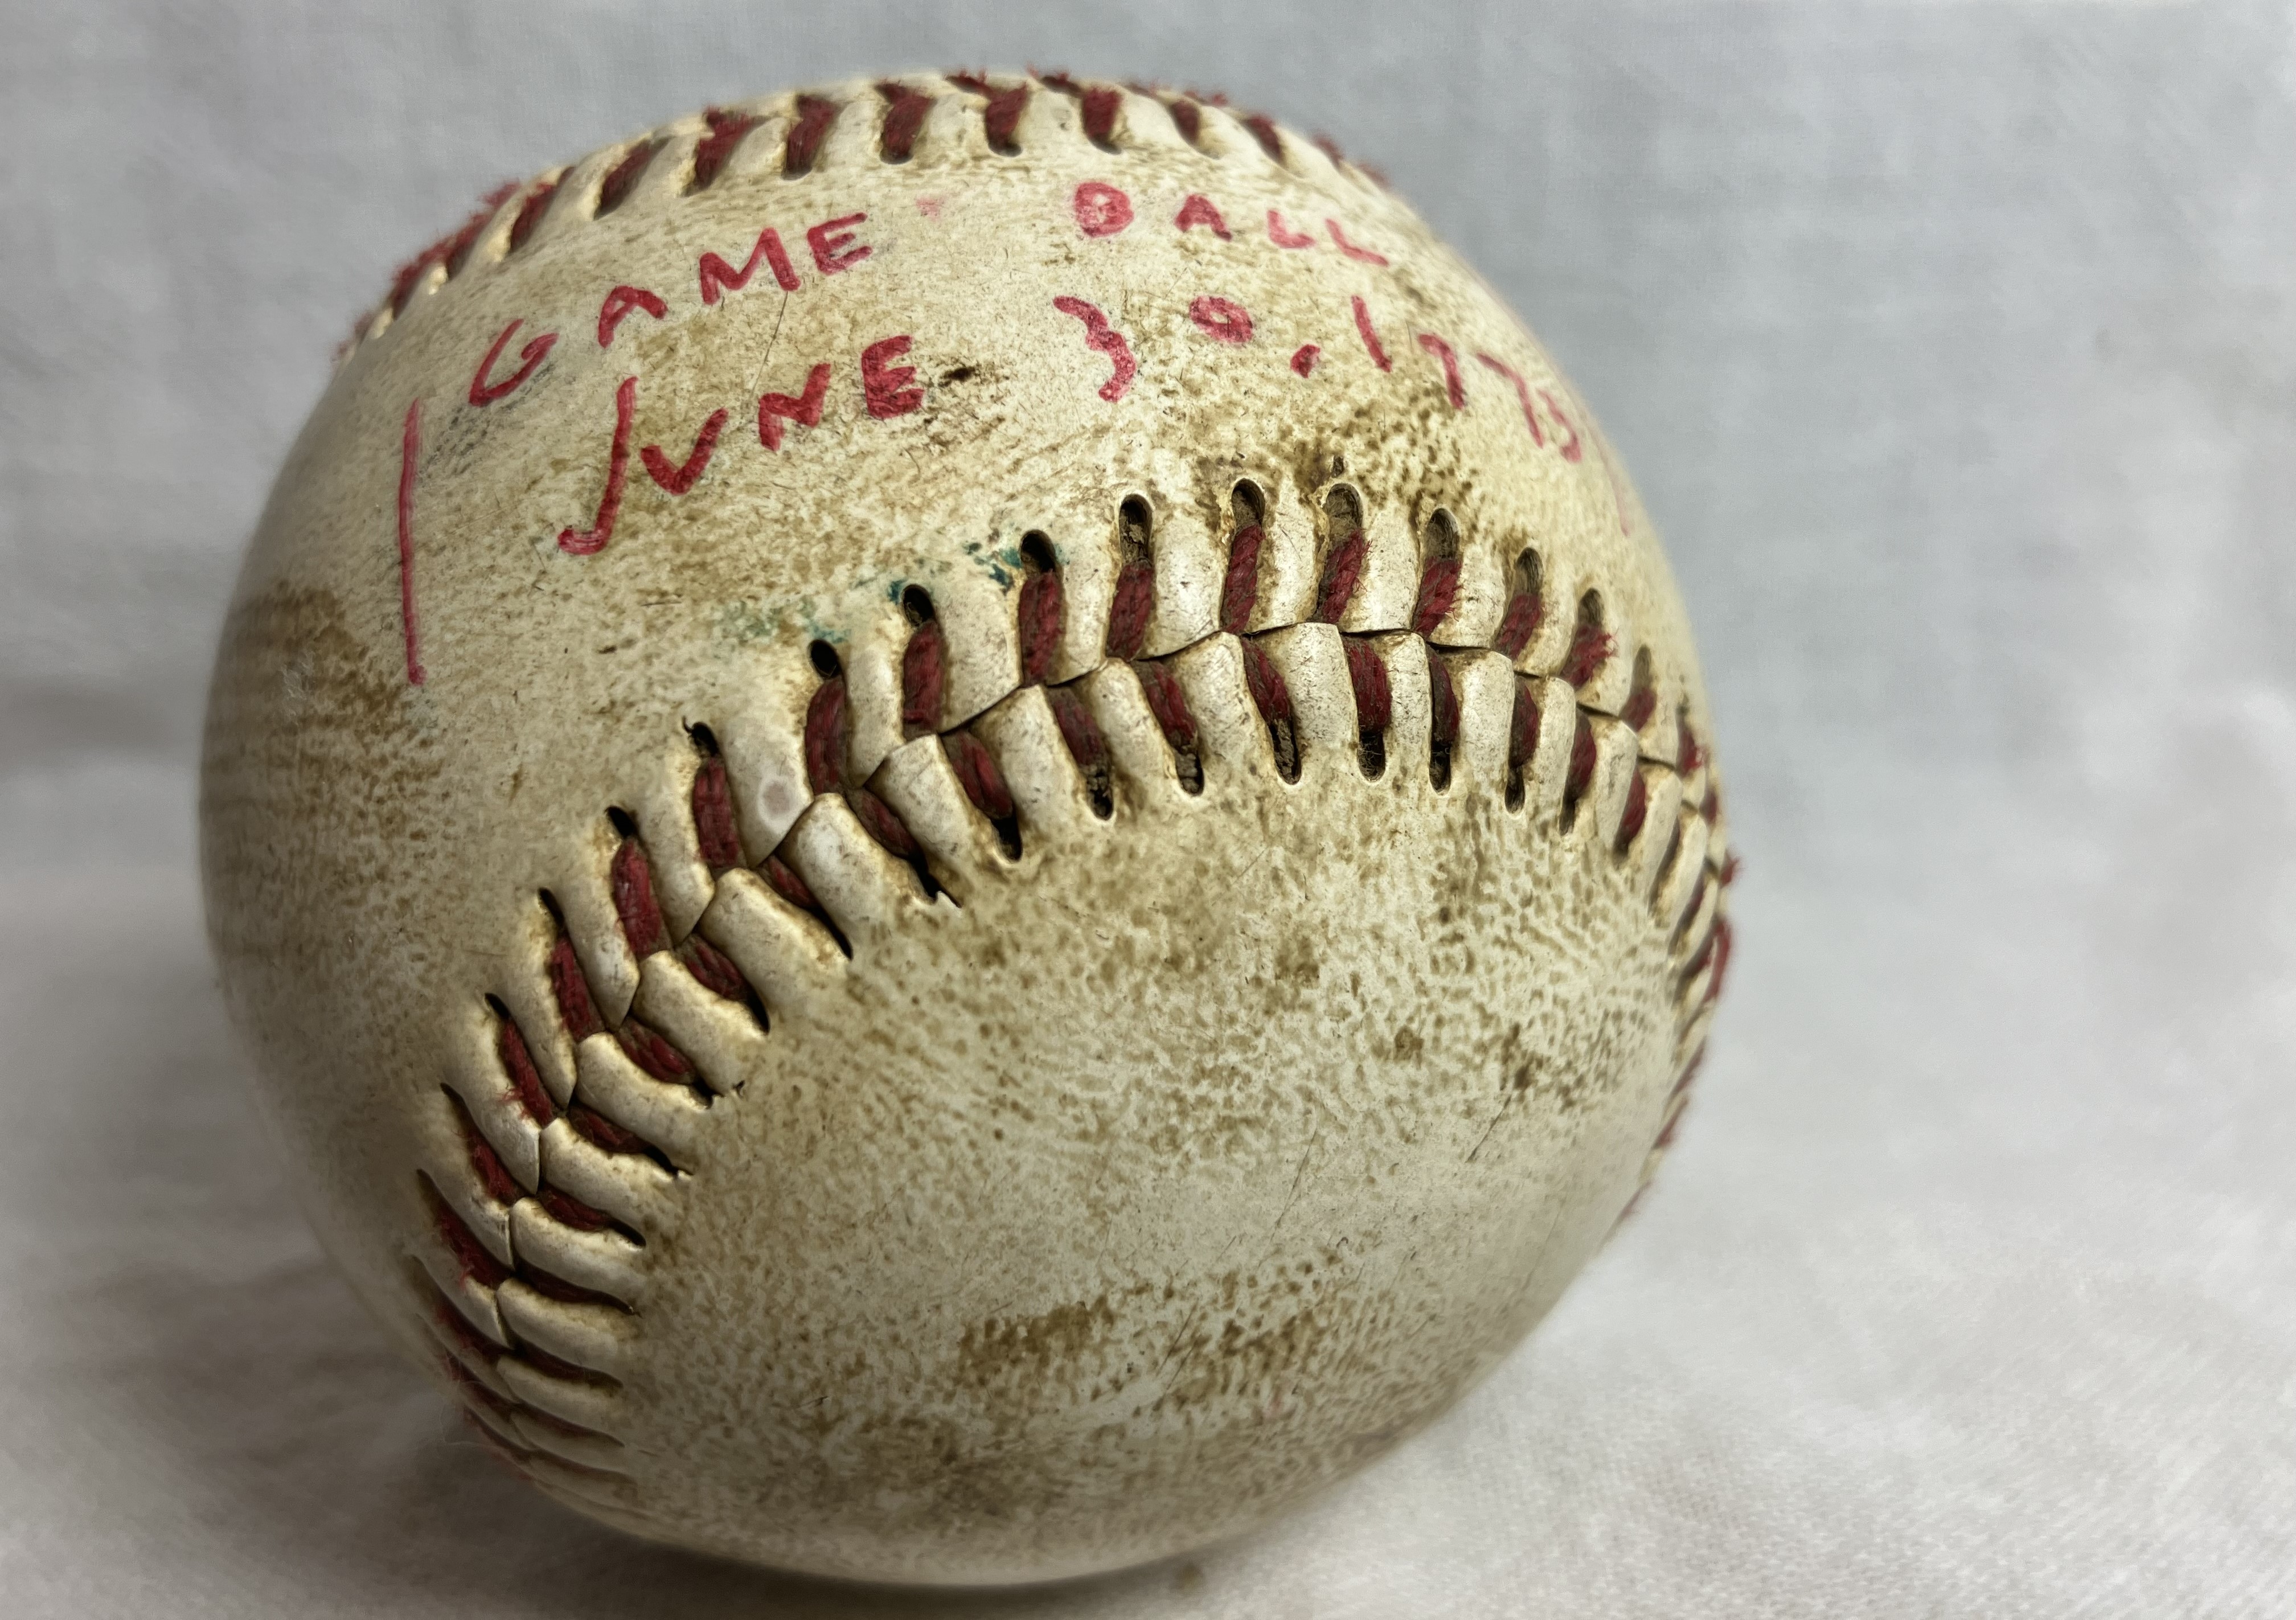 Mohammad's Montana Baseball Memories: Remembering Orioles Pitcher